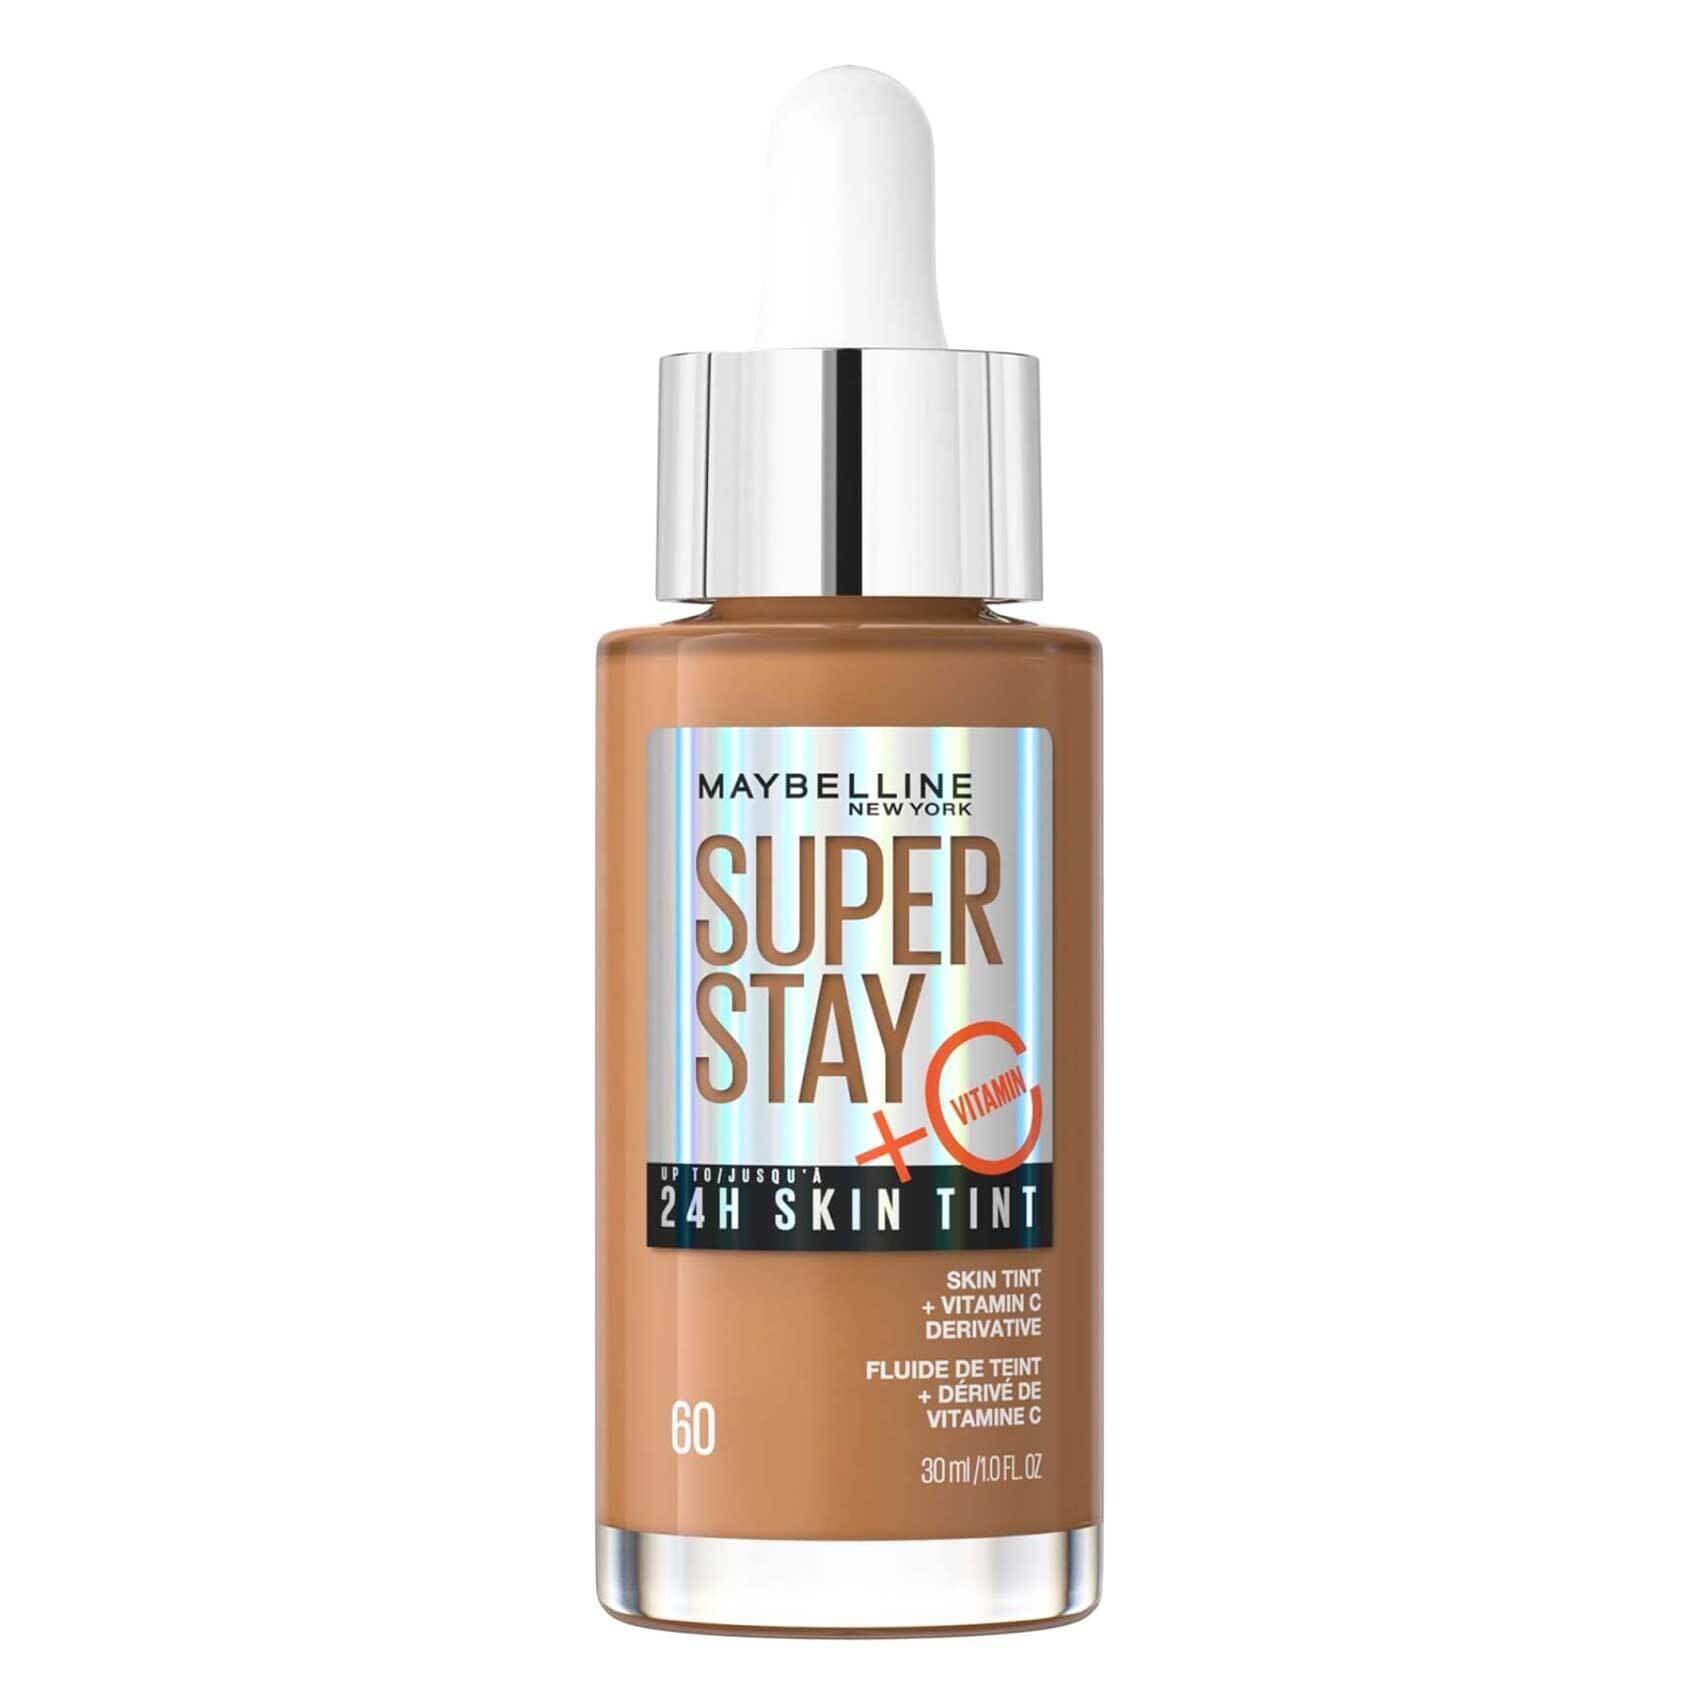 Buy Maybelline Super Stay 24H Skin Tint Foundation 30ml 60 Caramel Online -  Carrefour Kenya